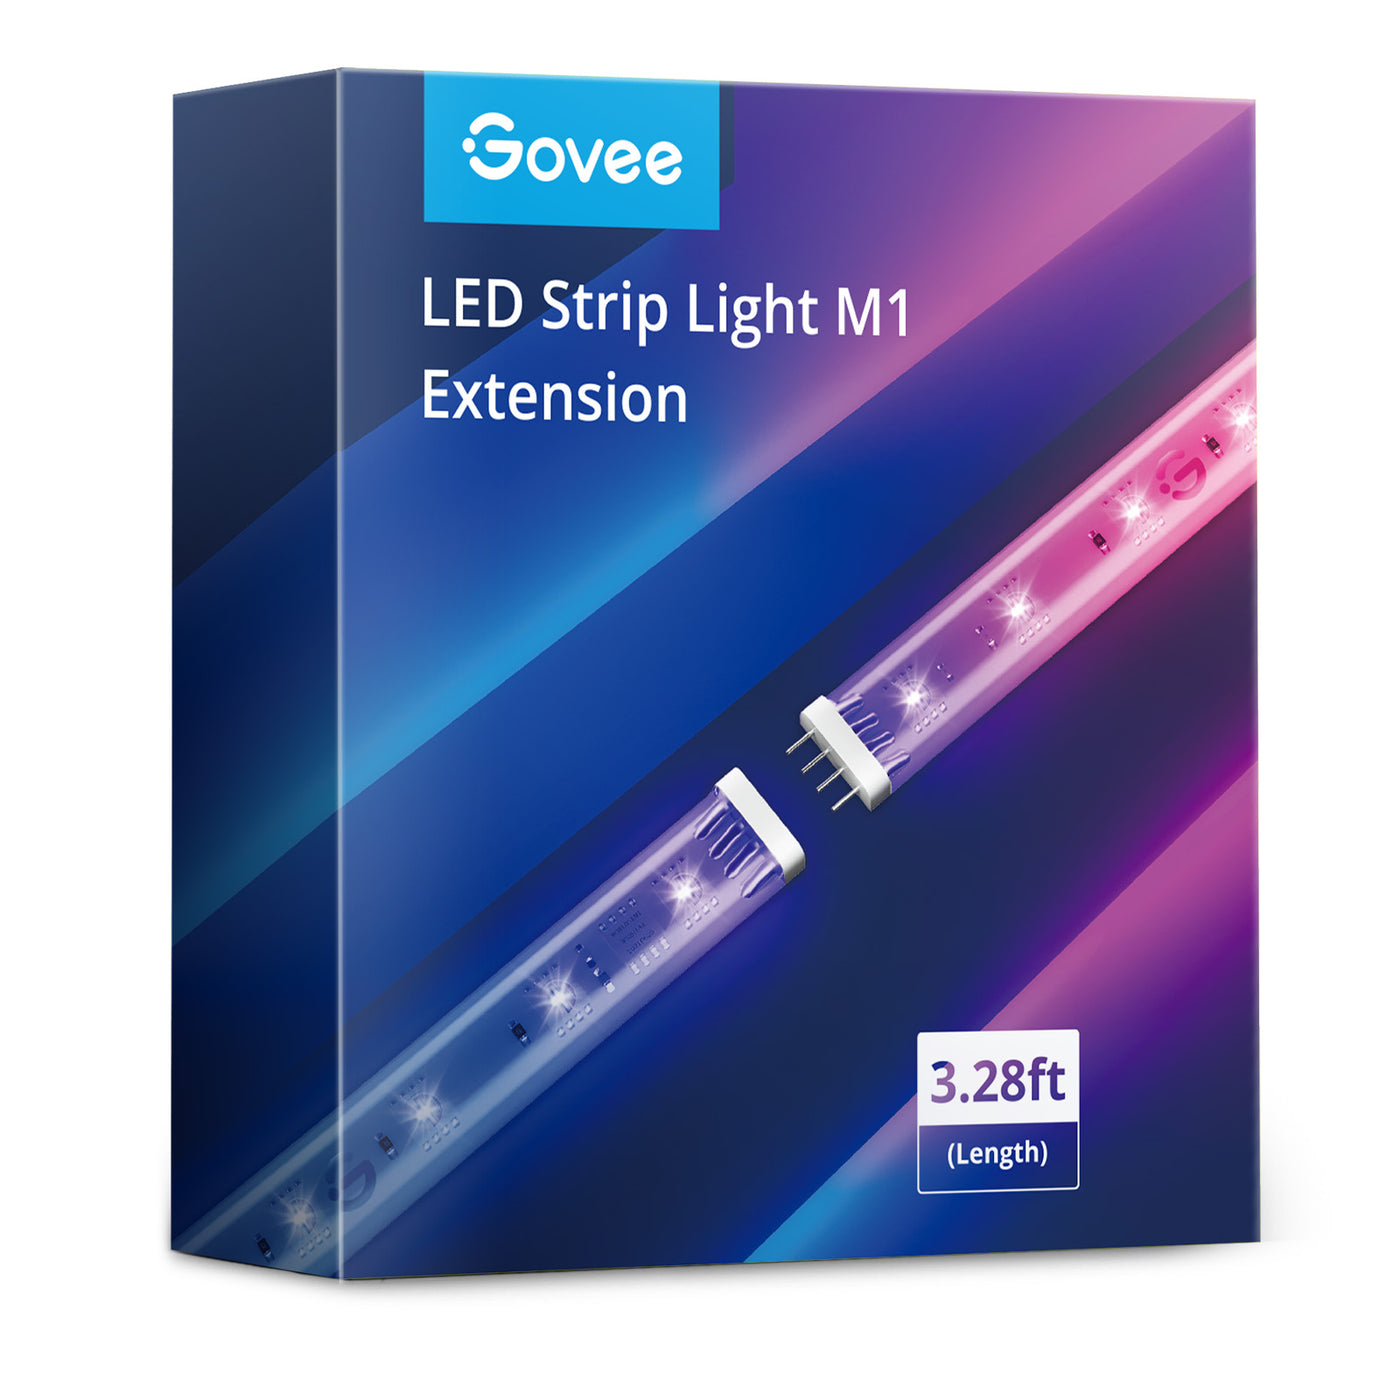 Govee LED Strip Light M1